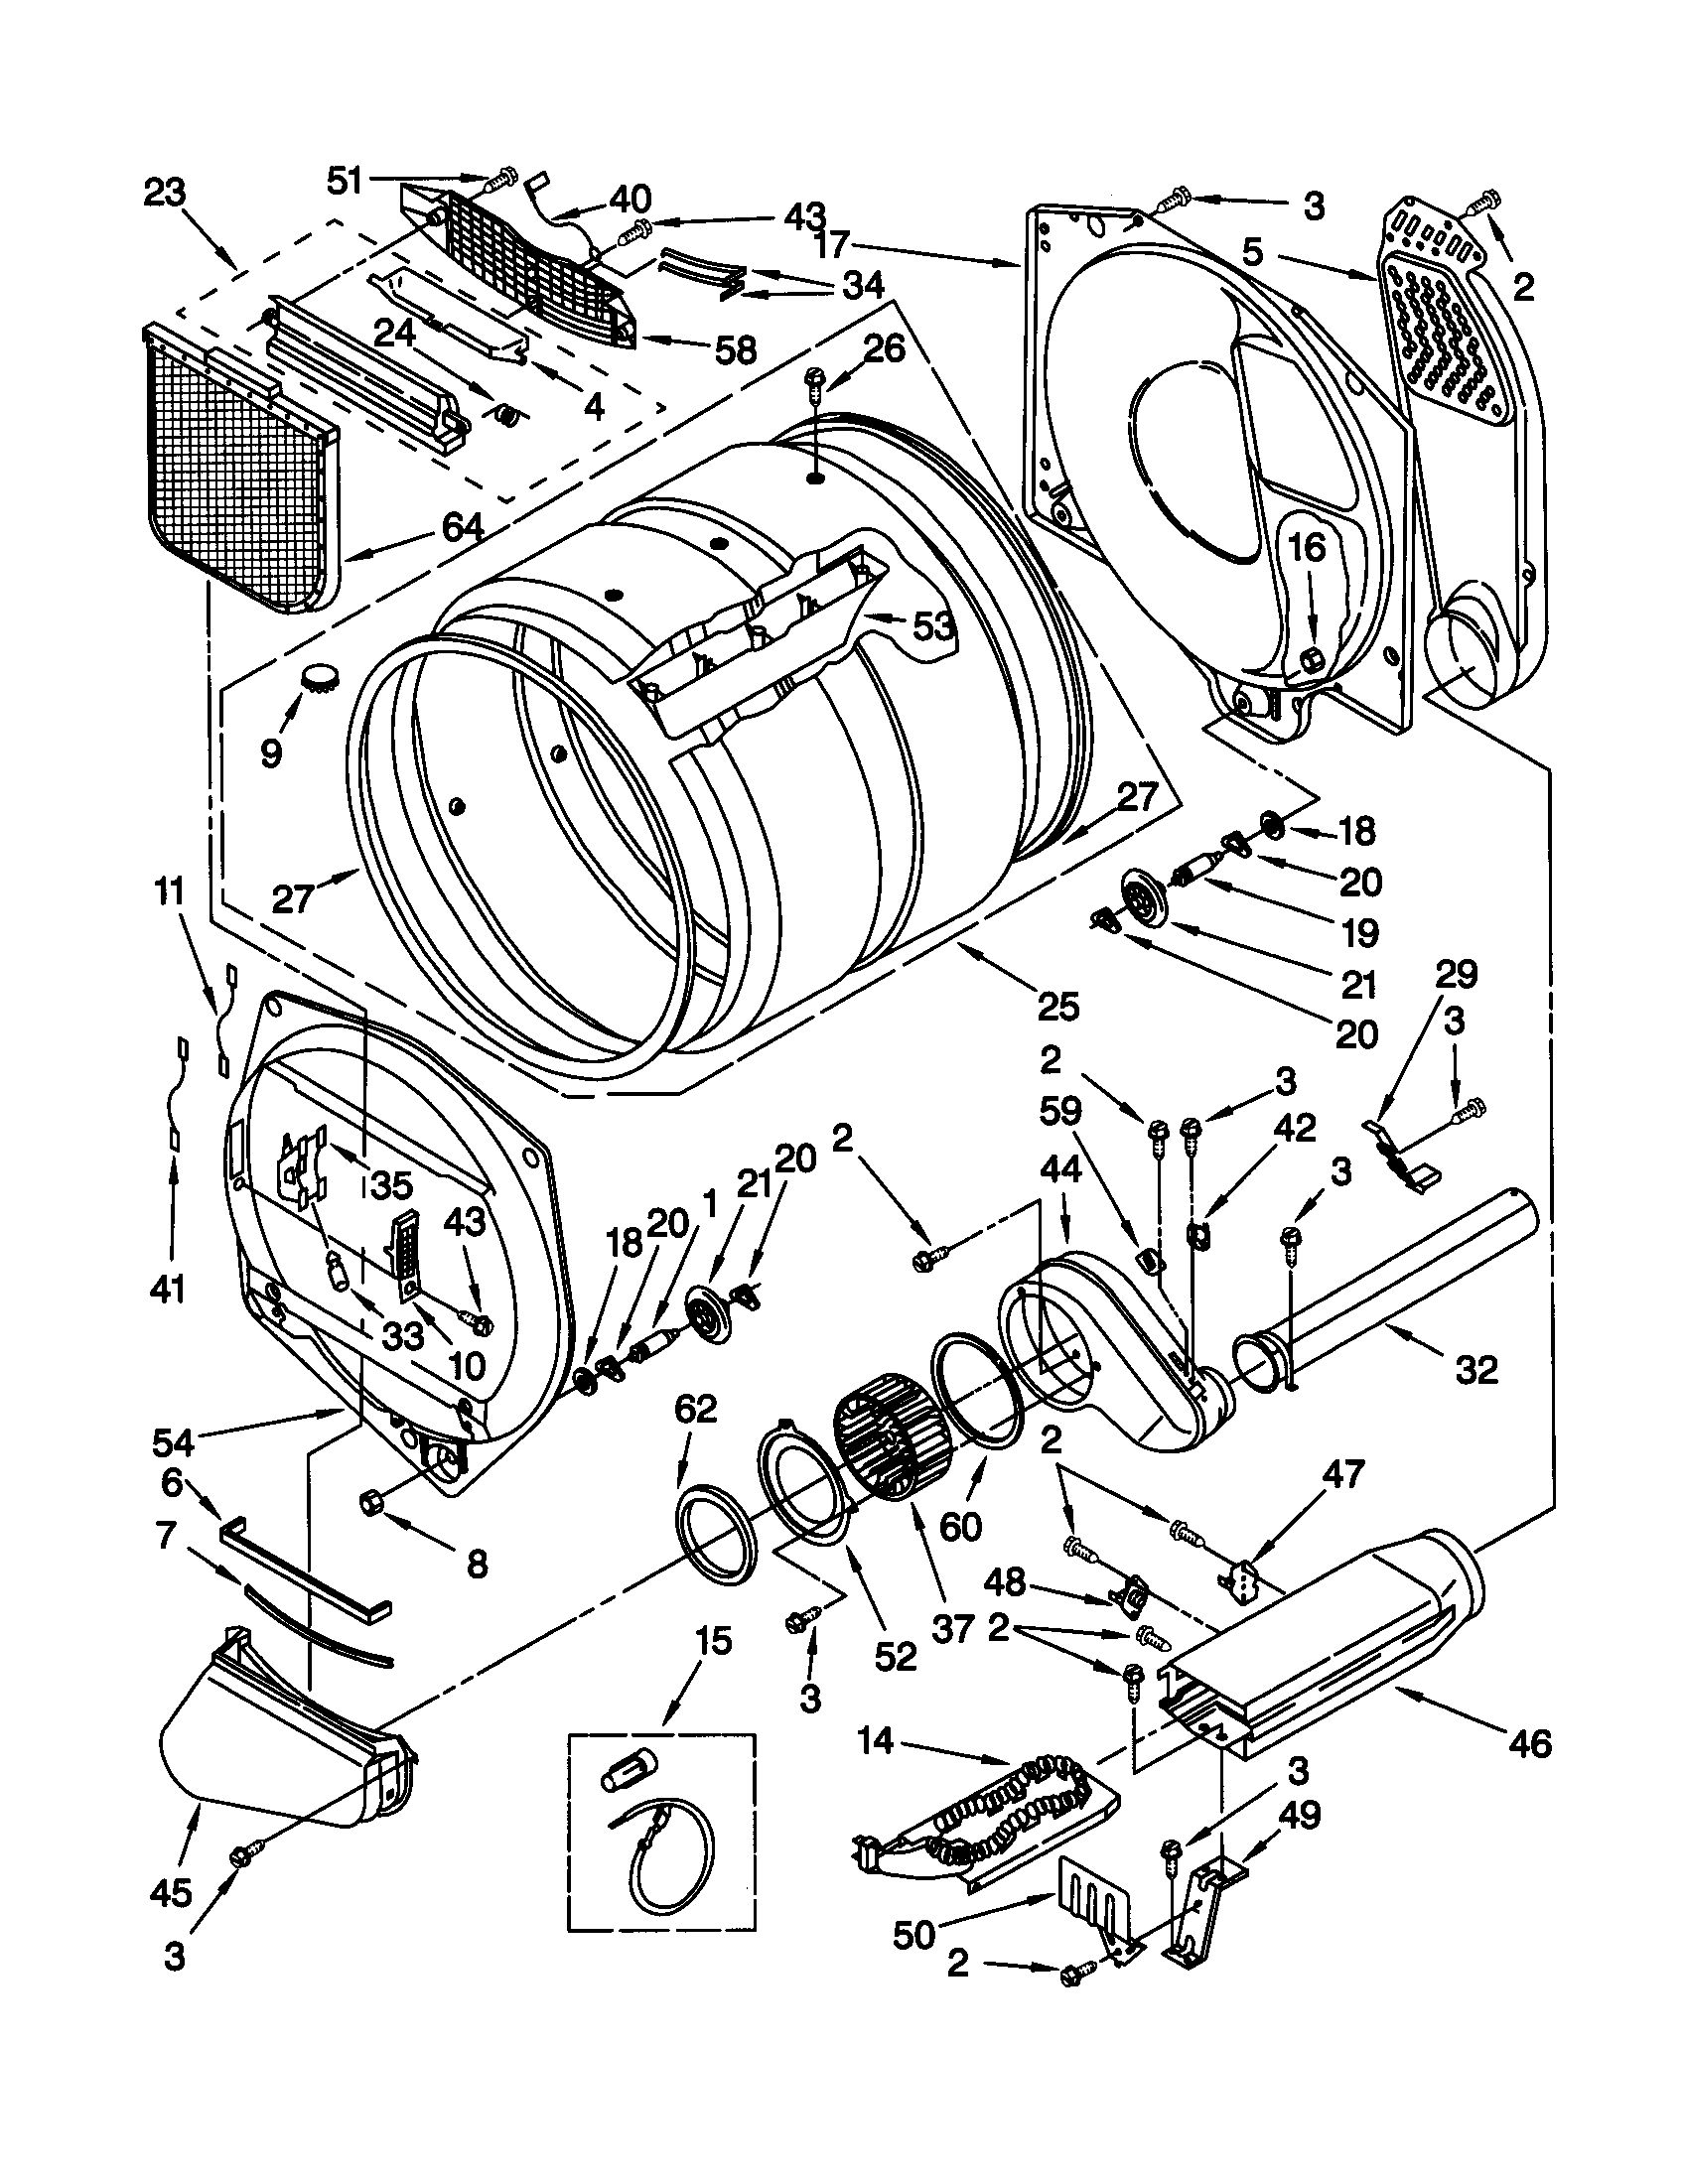 Kenmore Dryer Parts Sears Partsdirect